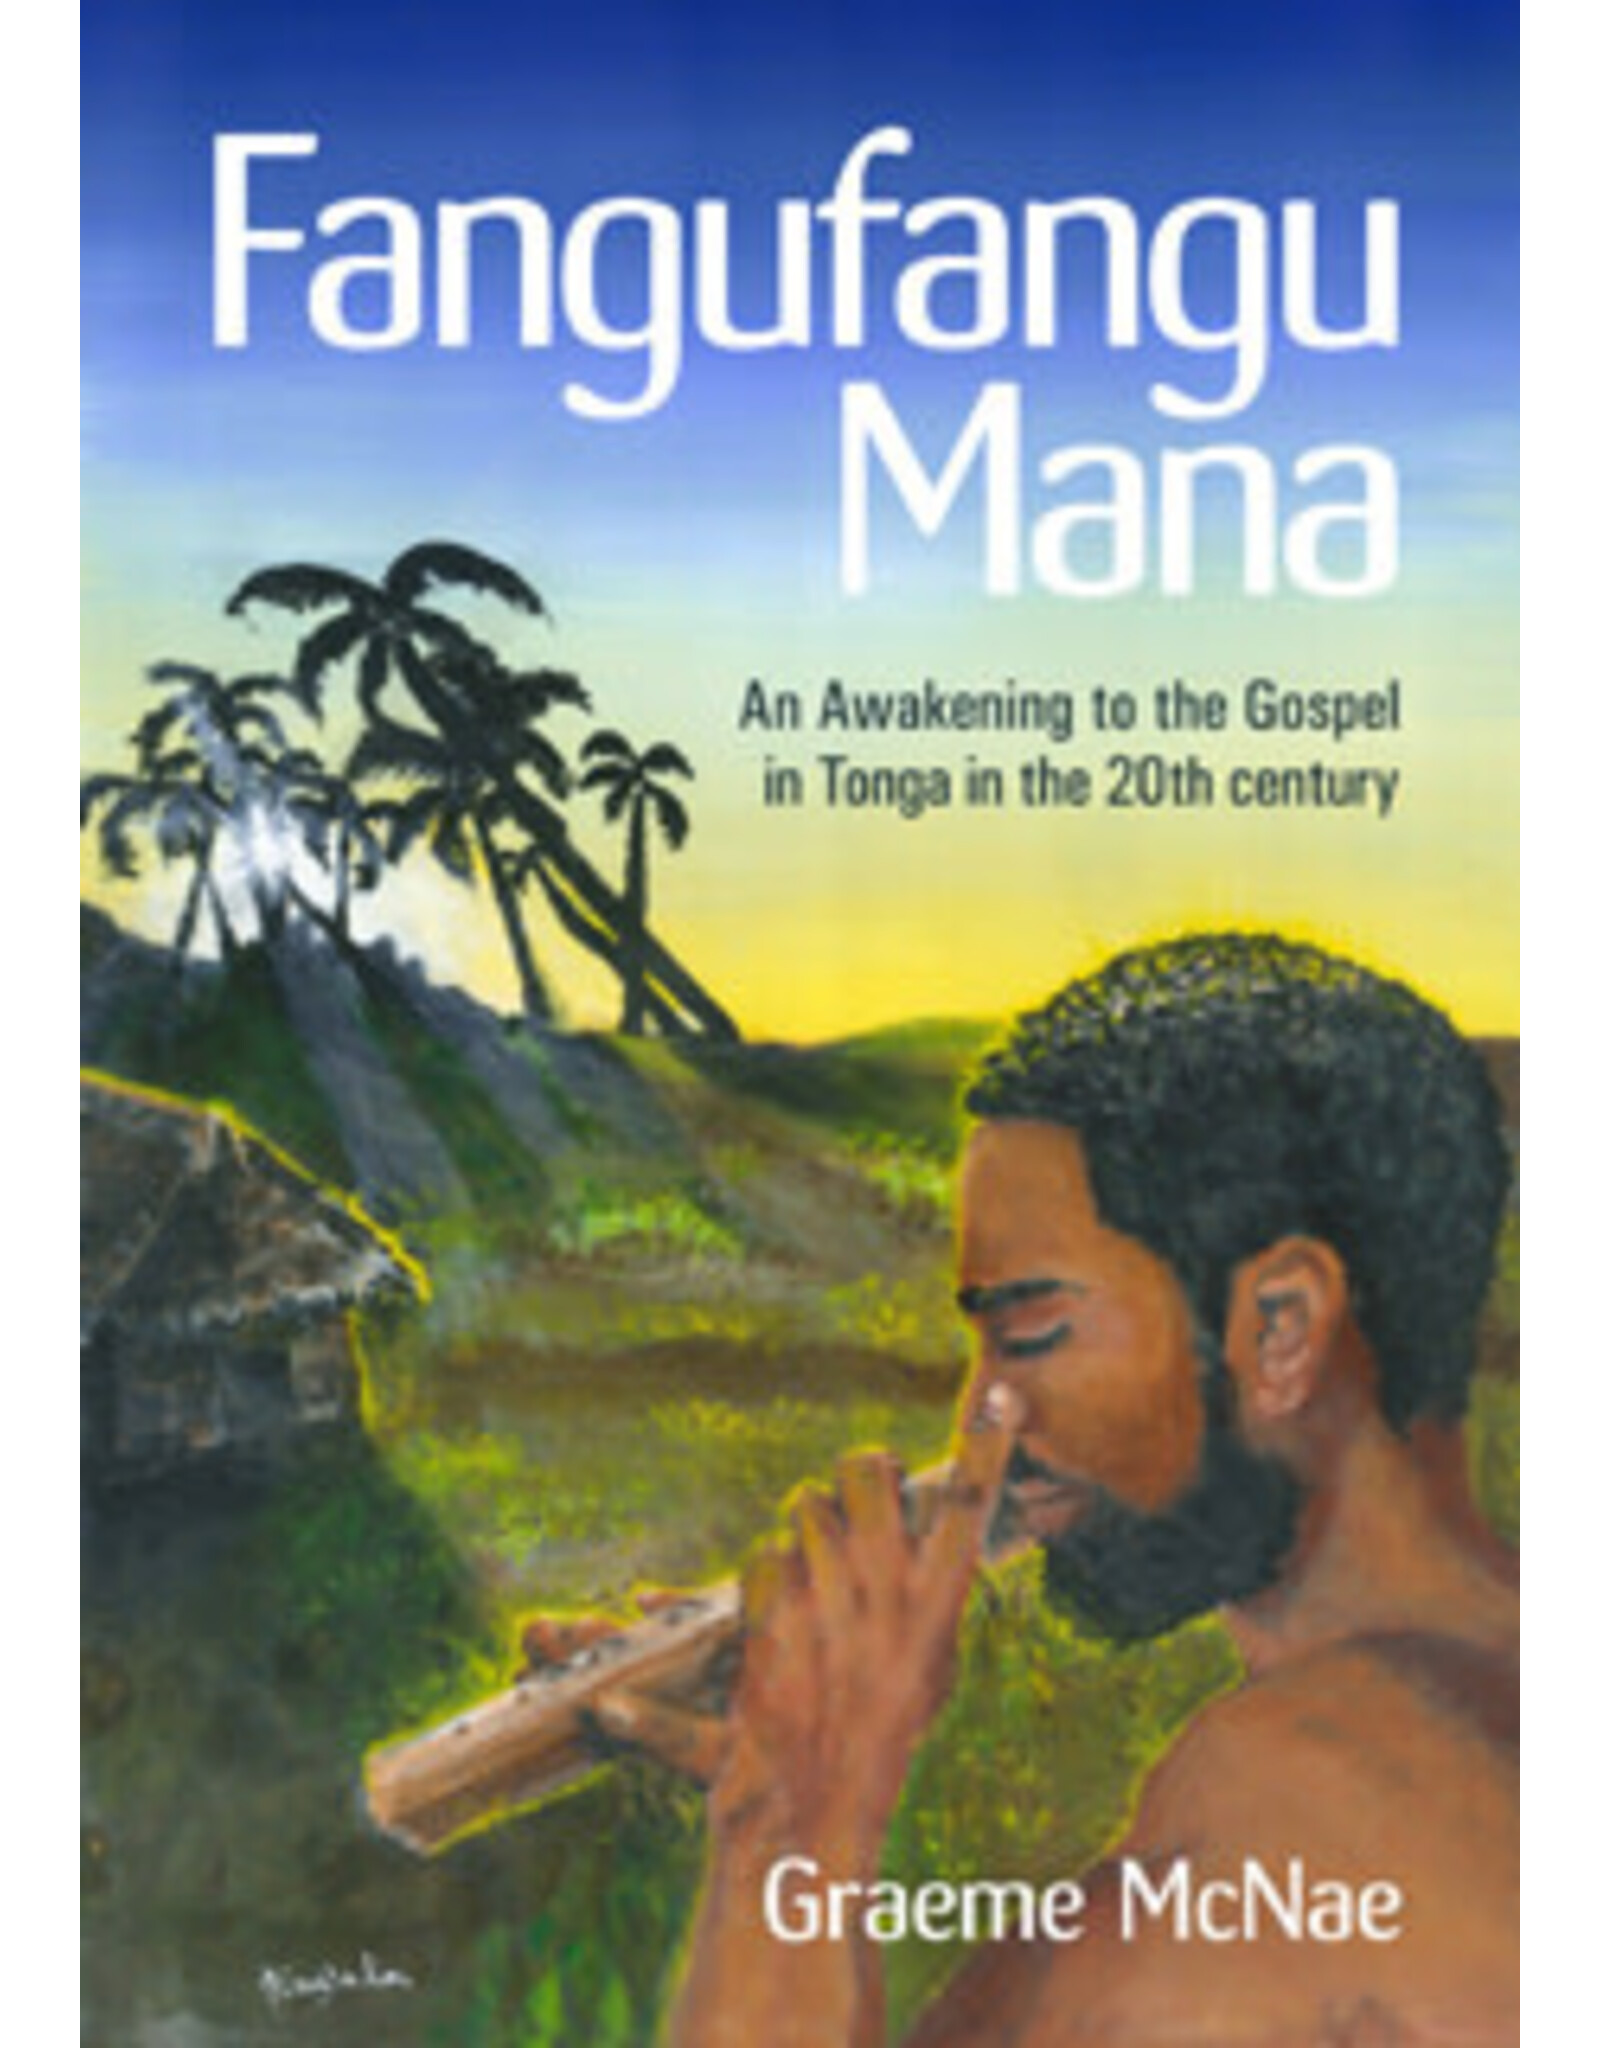 Graeme McNae Fangufangu Mana - An Awakening to the Gospel in the 20th Century